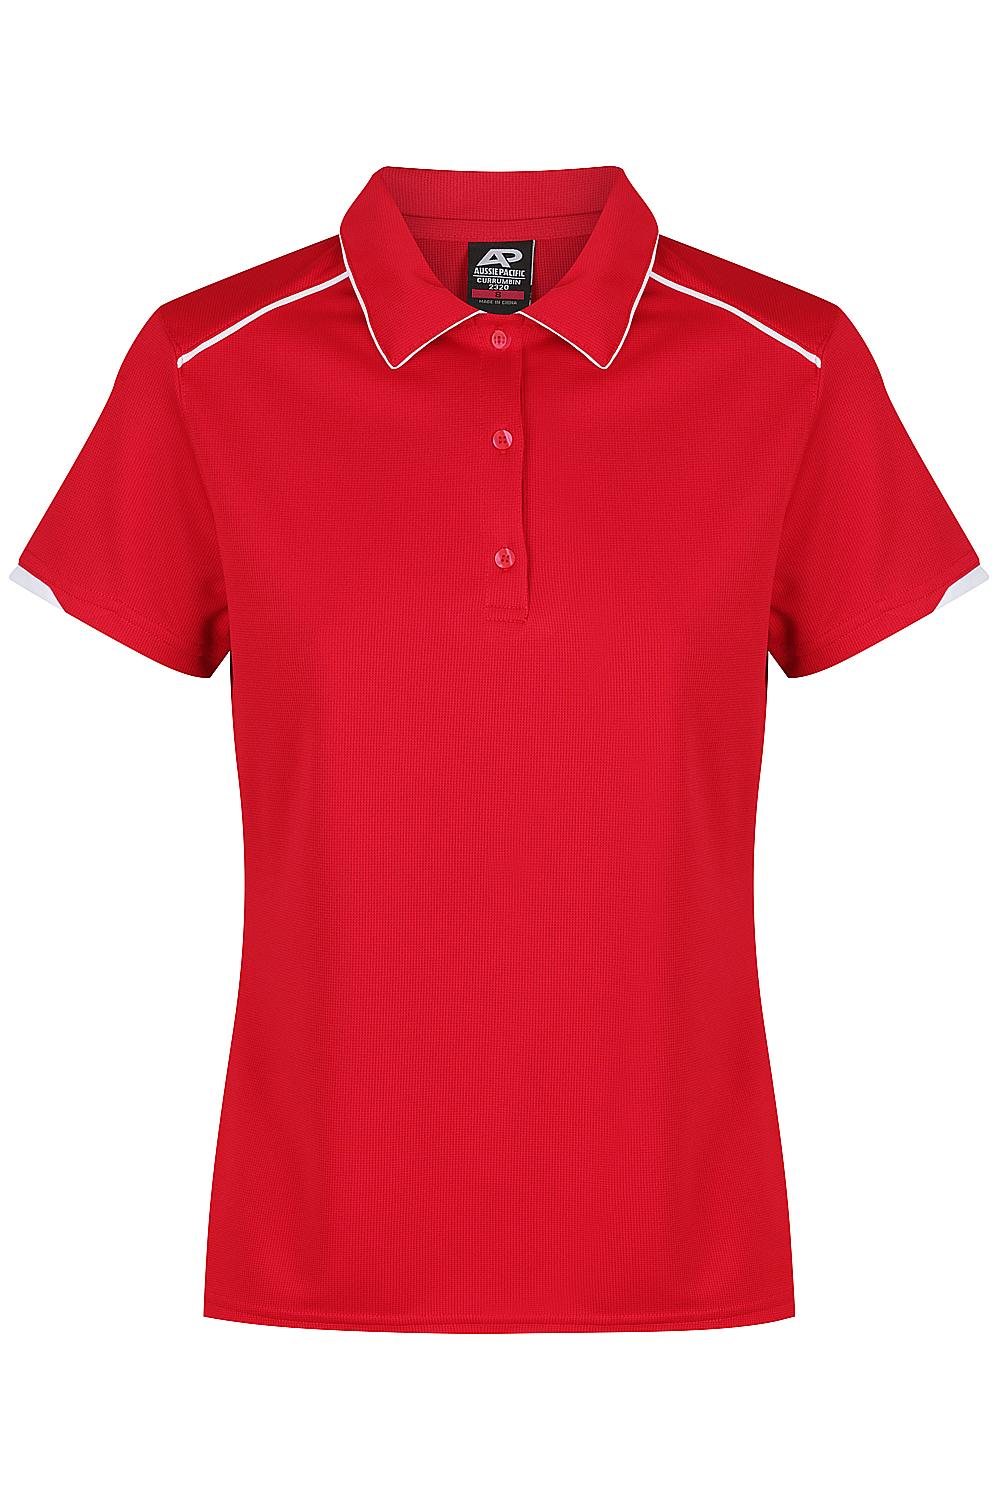 Custom Ladies Currumbin Work Polo Shirts - Red/White | Safe-T-Rex Workwear Australia